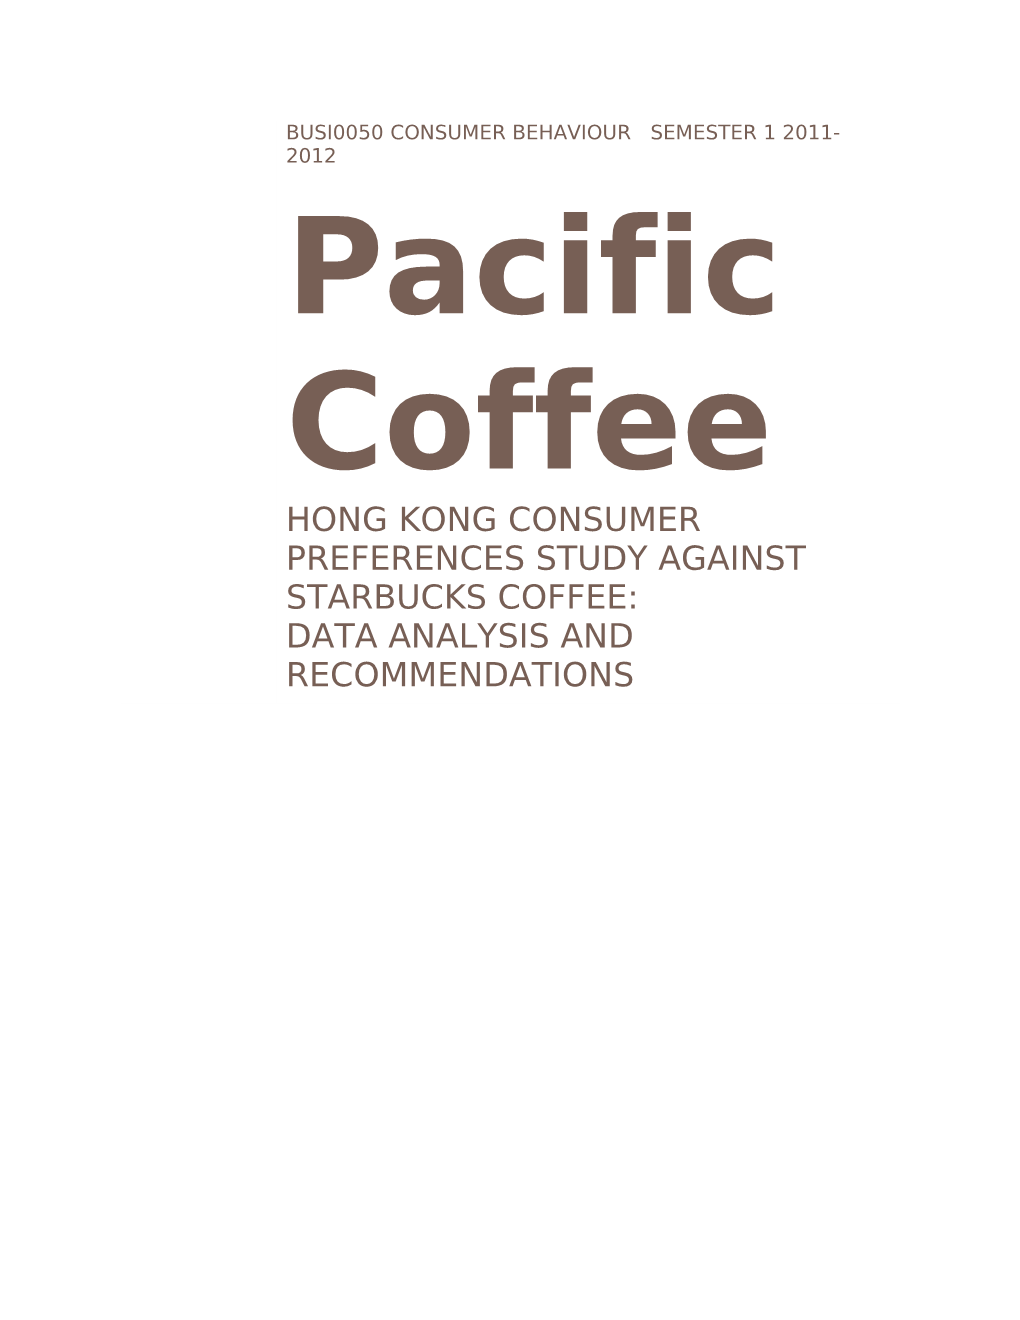 Hong Kong Consumer Preferences Study Against Starbucks Coffee